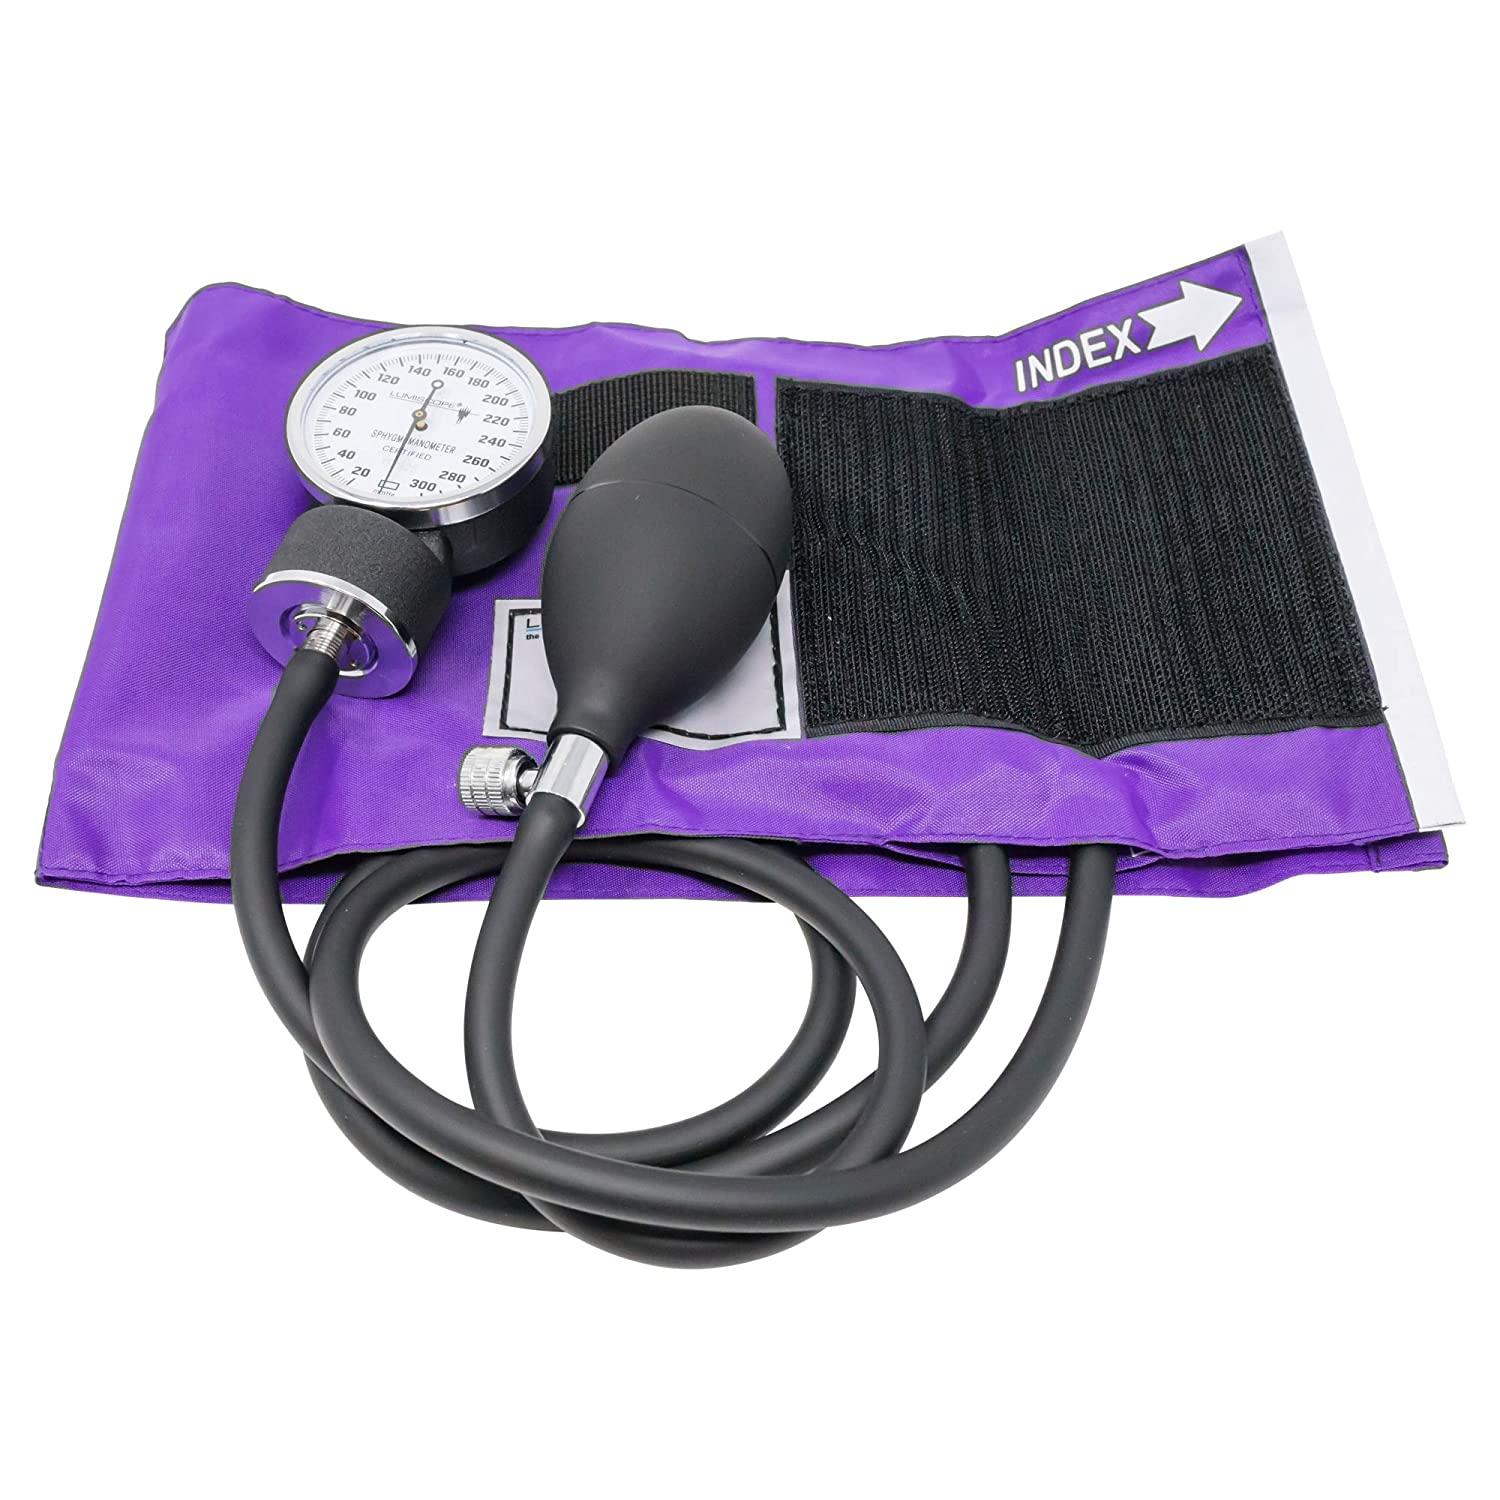 Graham Field Lumiscope Automatic Blood Pressure Monitor